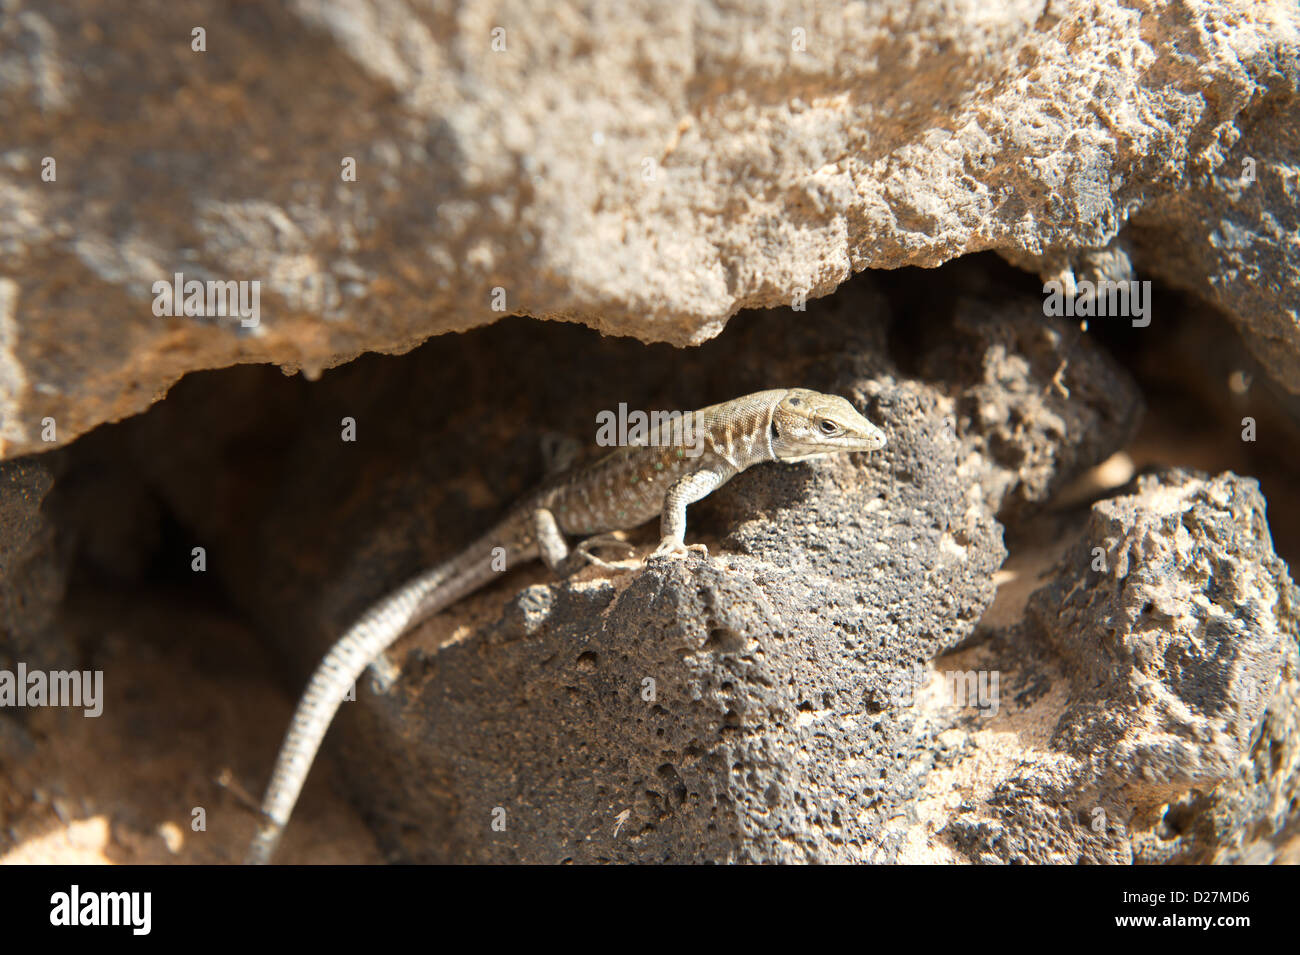 Atlantic Lizard Gallotia atlantica in rock cleft Stock Photo